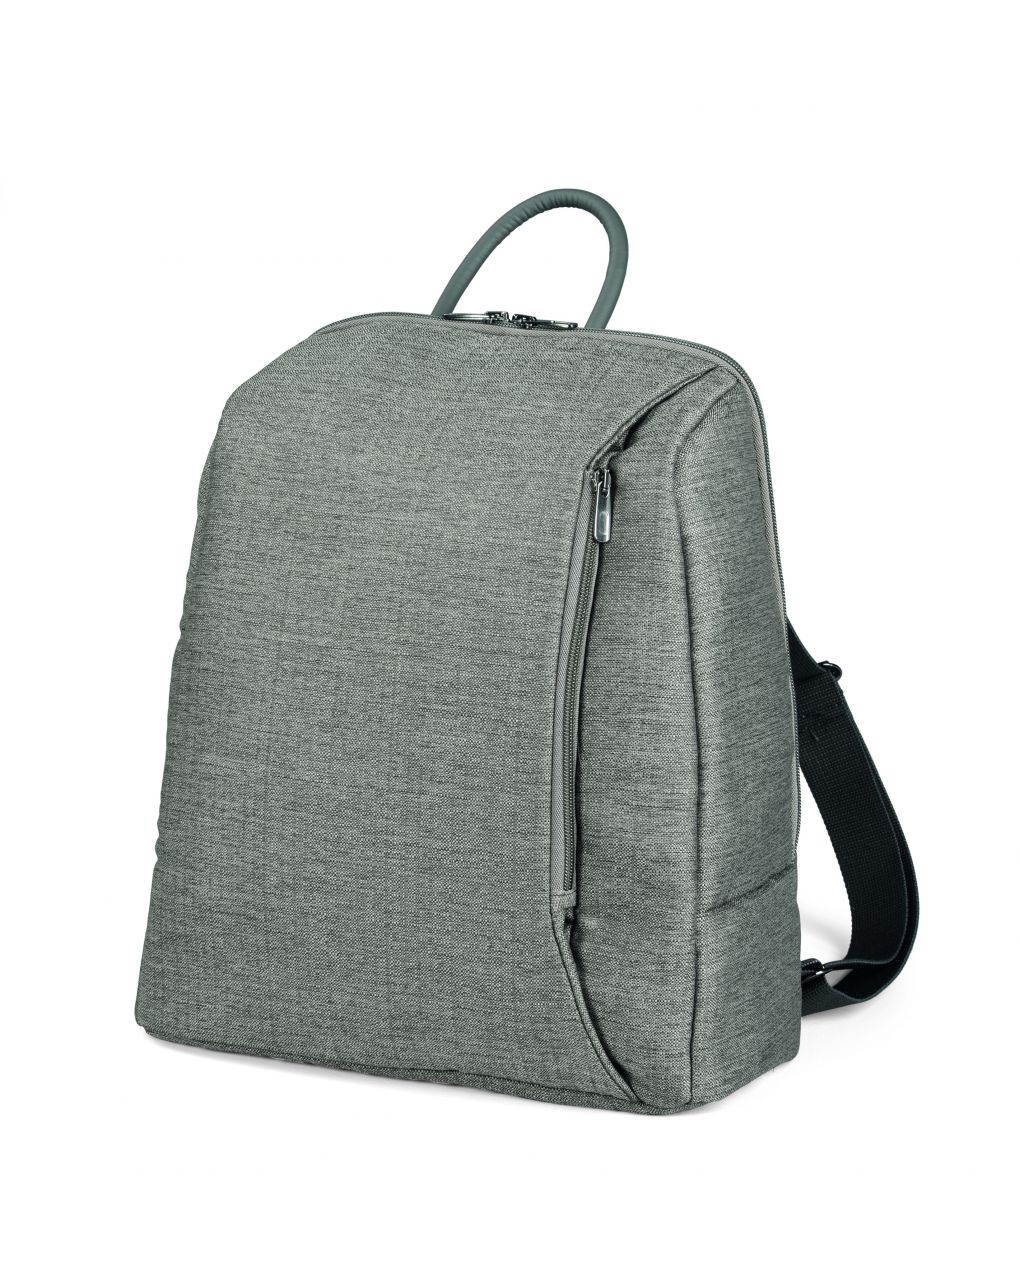 Backpack city grey